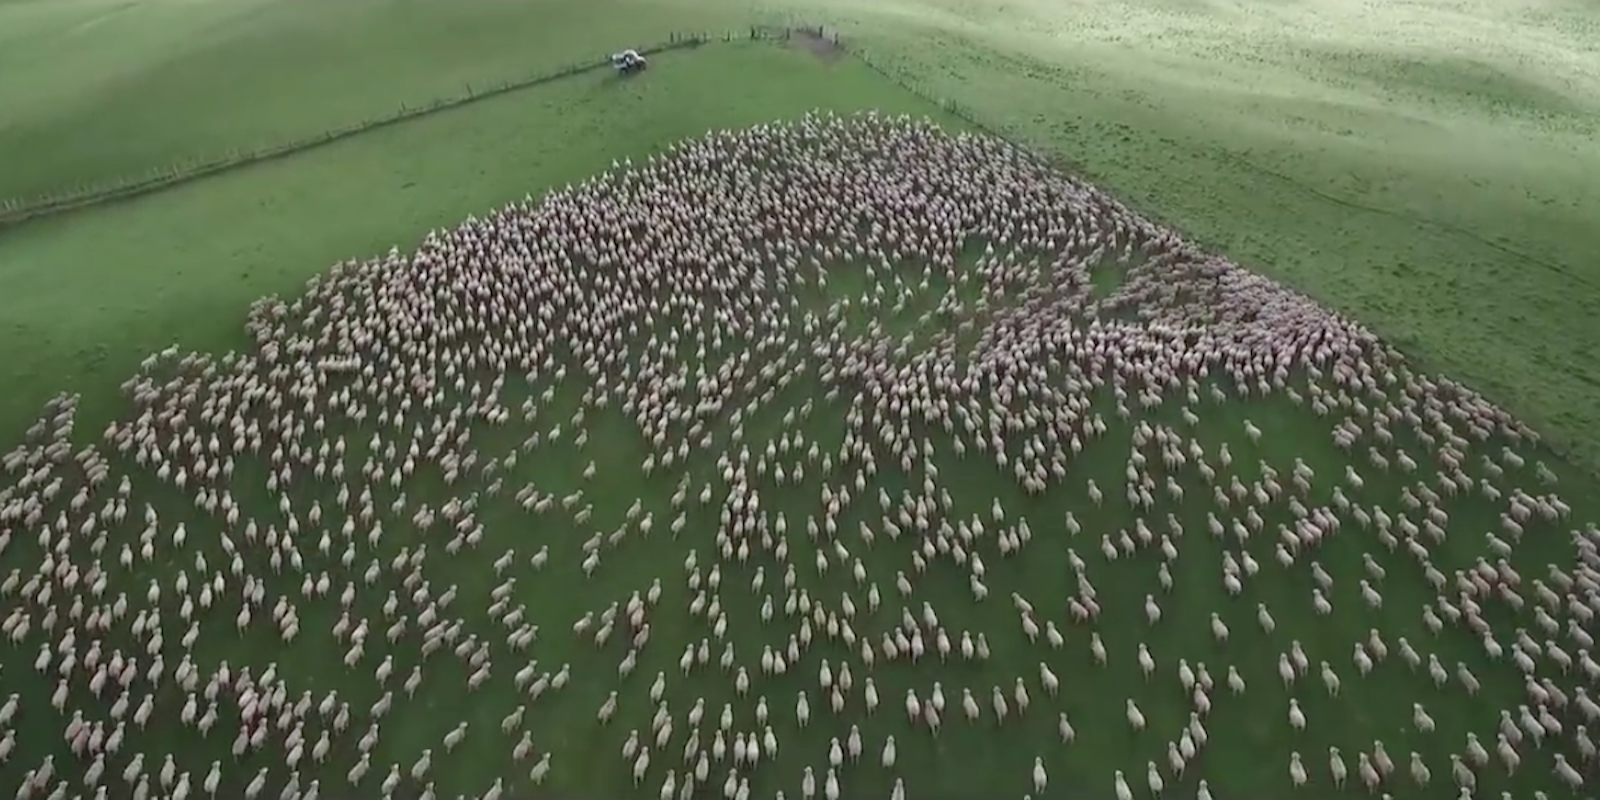 Dog herding sheep, hundreds of sheep